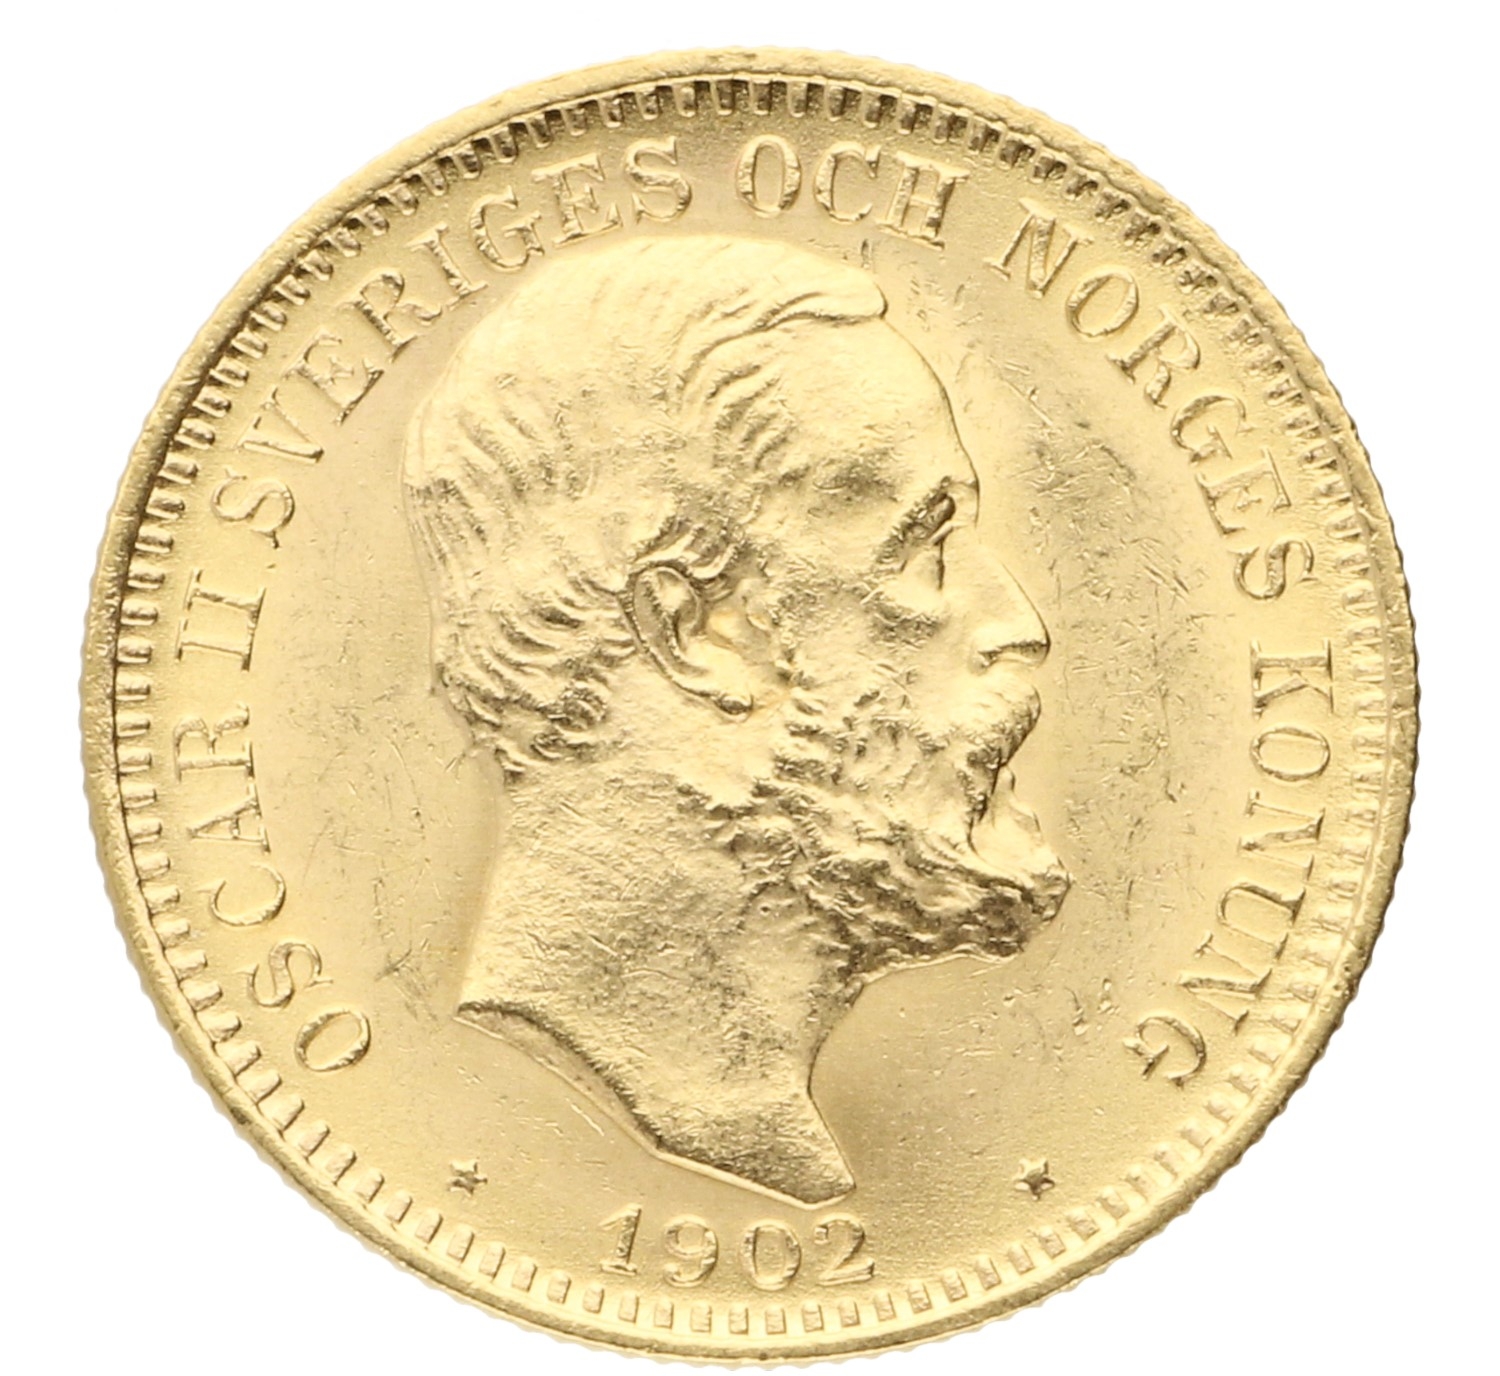 20 Kronor - Sweden - 1902